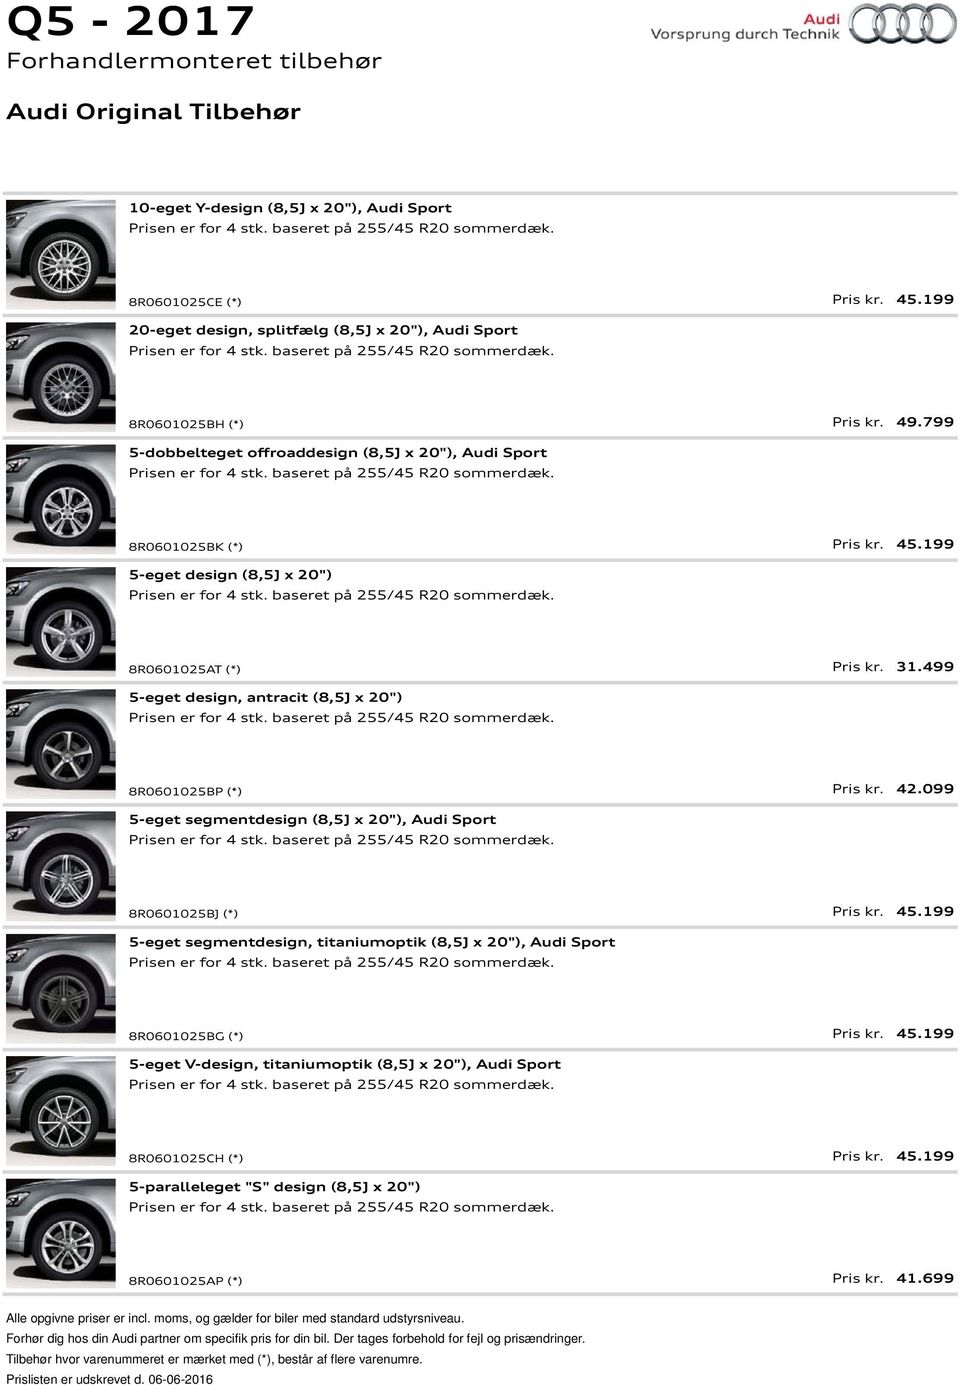 499 5-eget design, antracit (8,5J x 20") 8R0601025BP (*) Pris kr. 42.099 5-eget segmentdesign (8,5J x 20"), Audi Sport 8R0601025BJ (*) Pris kr. 45.